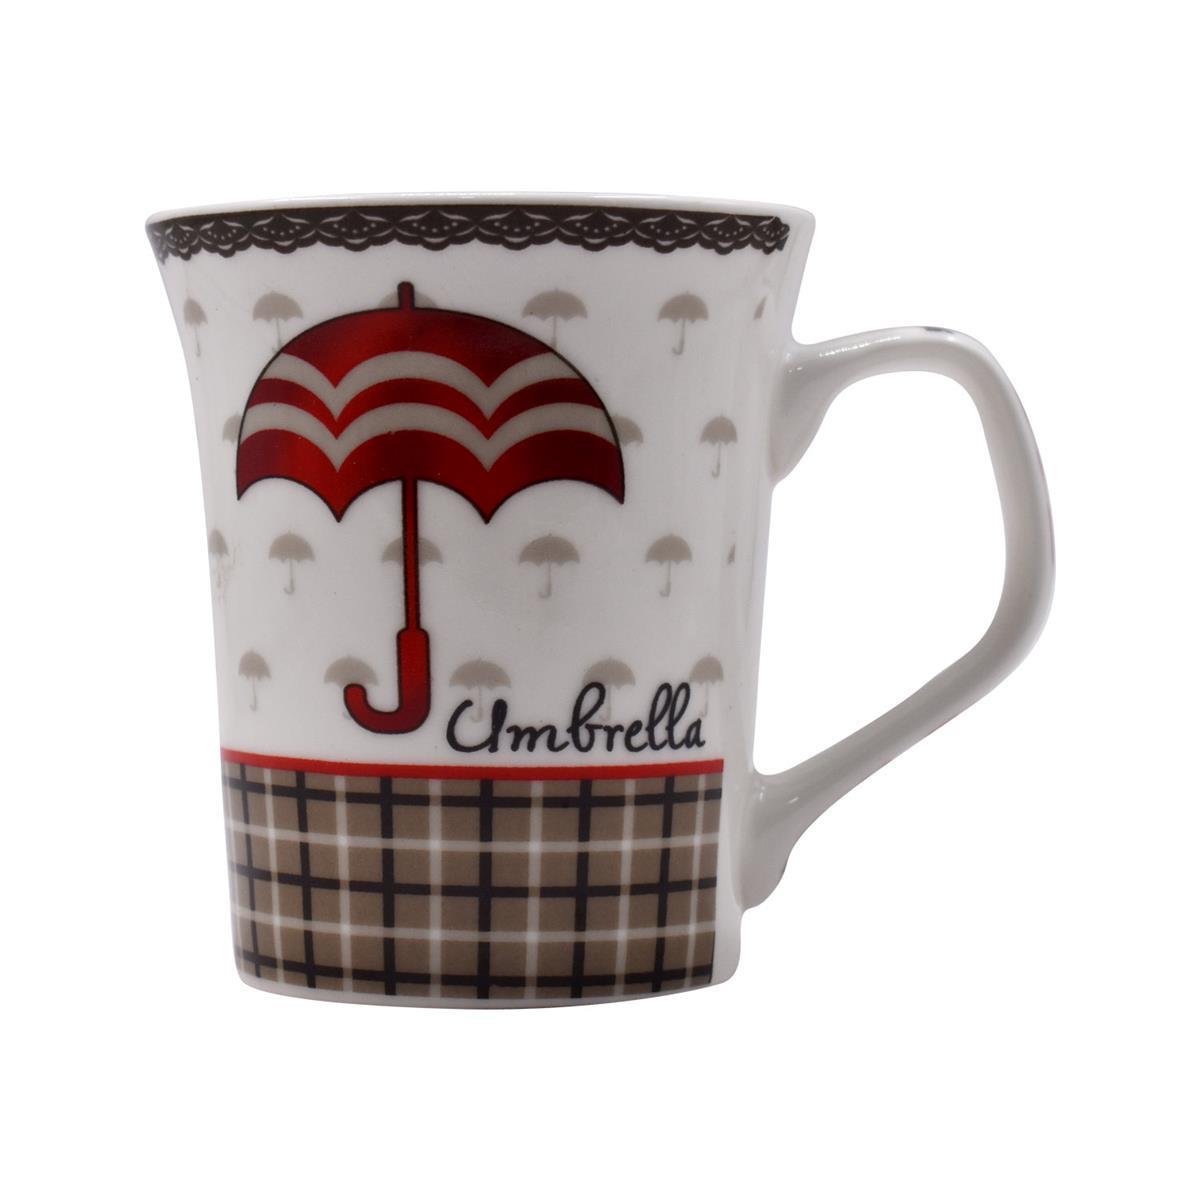 Printed Ceramic Tall Coffee or Tea Mug with handle - 325ml (3463-A)